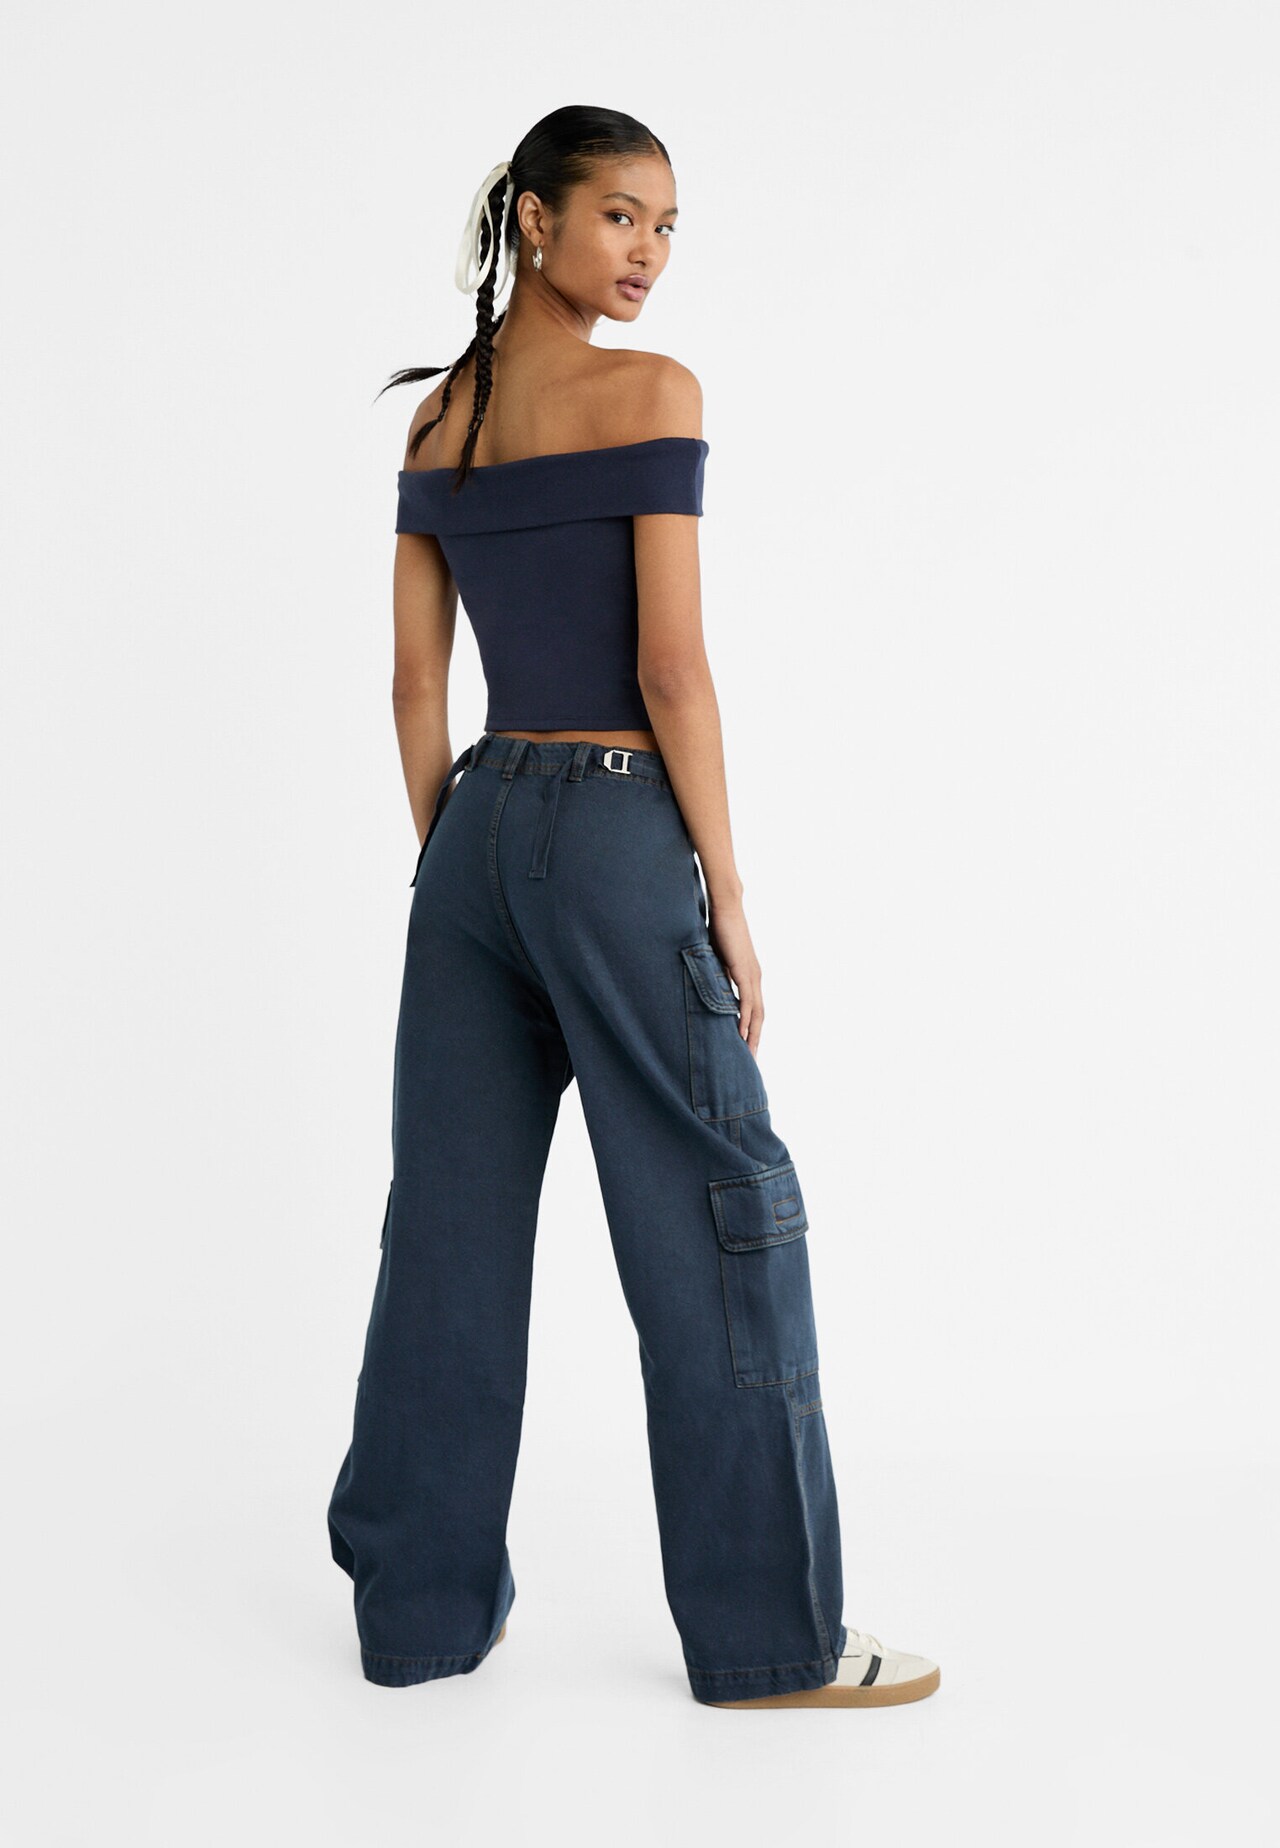 Cargo pocket trousers - Women's fashion